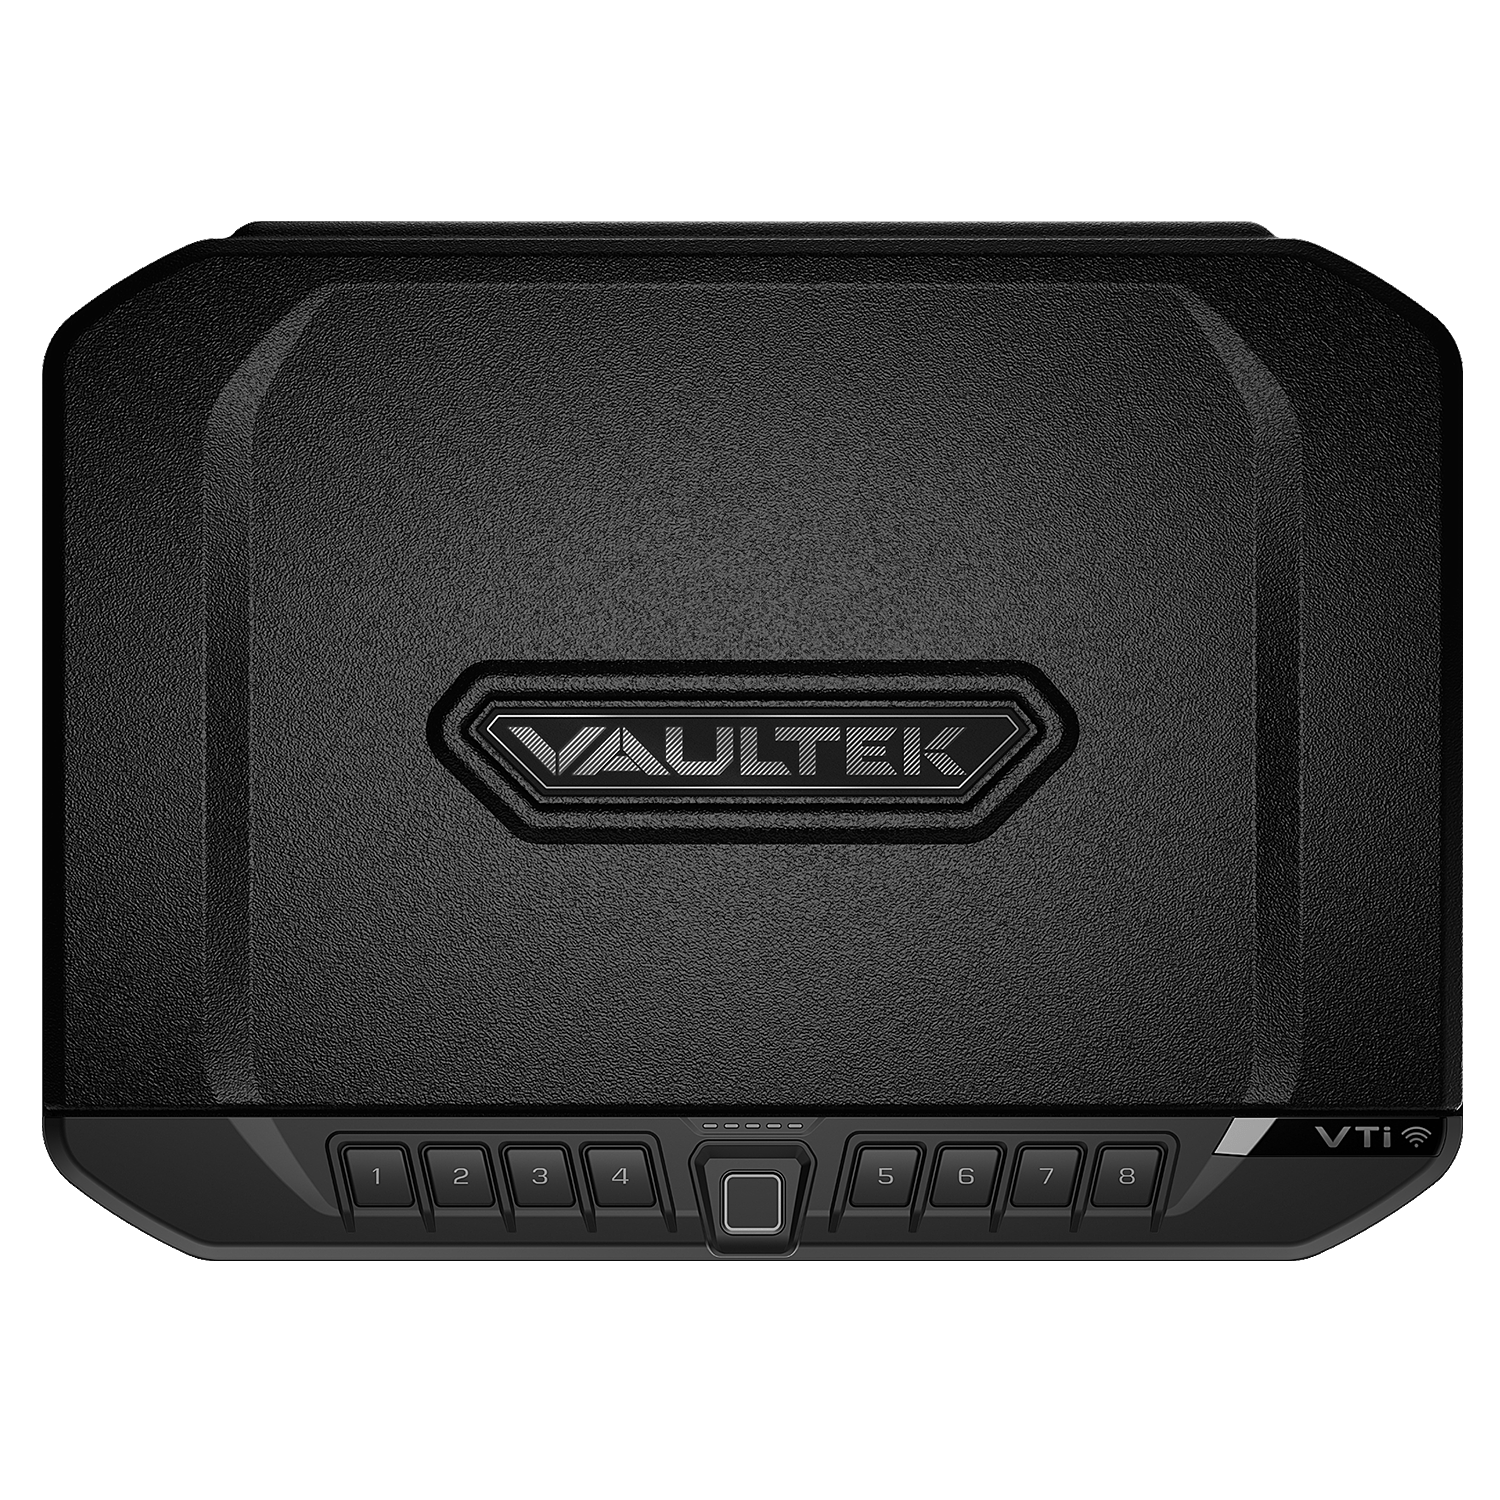 Vaultek NVTi Full Size Rugged WiFi and Biometric Smart Safe Armadillo Safe and Vault